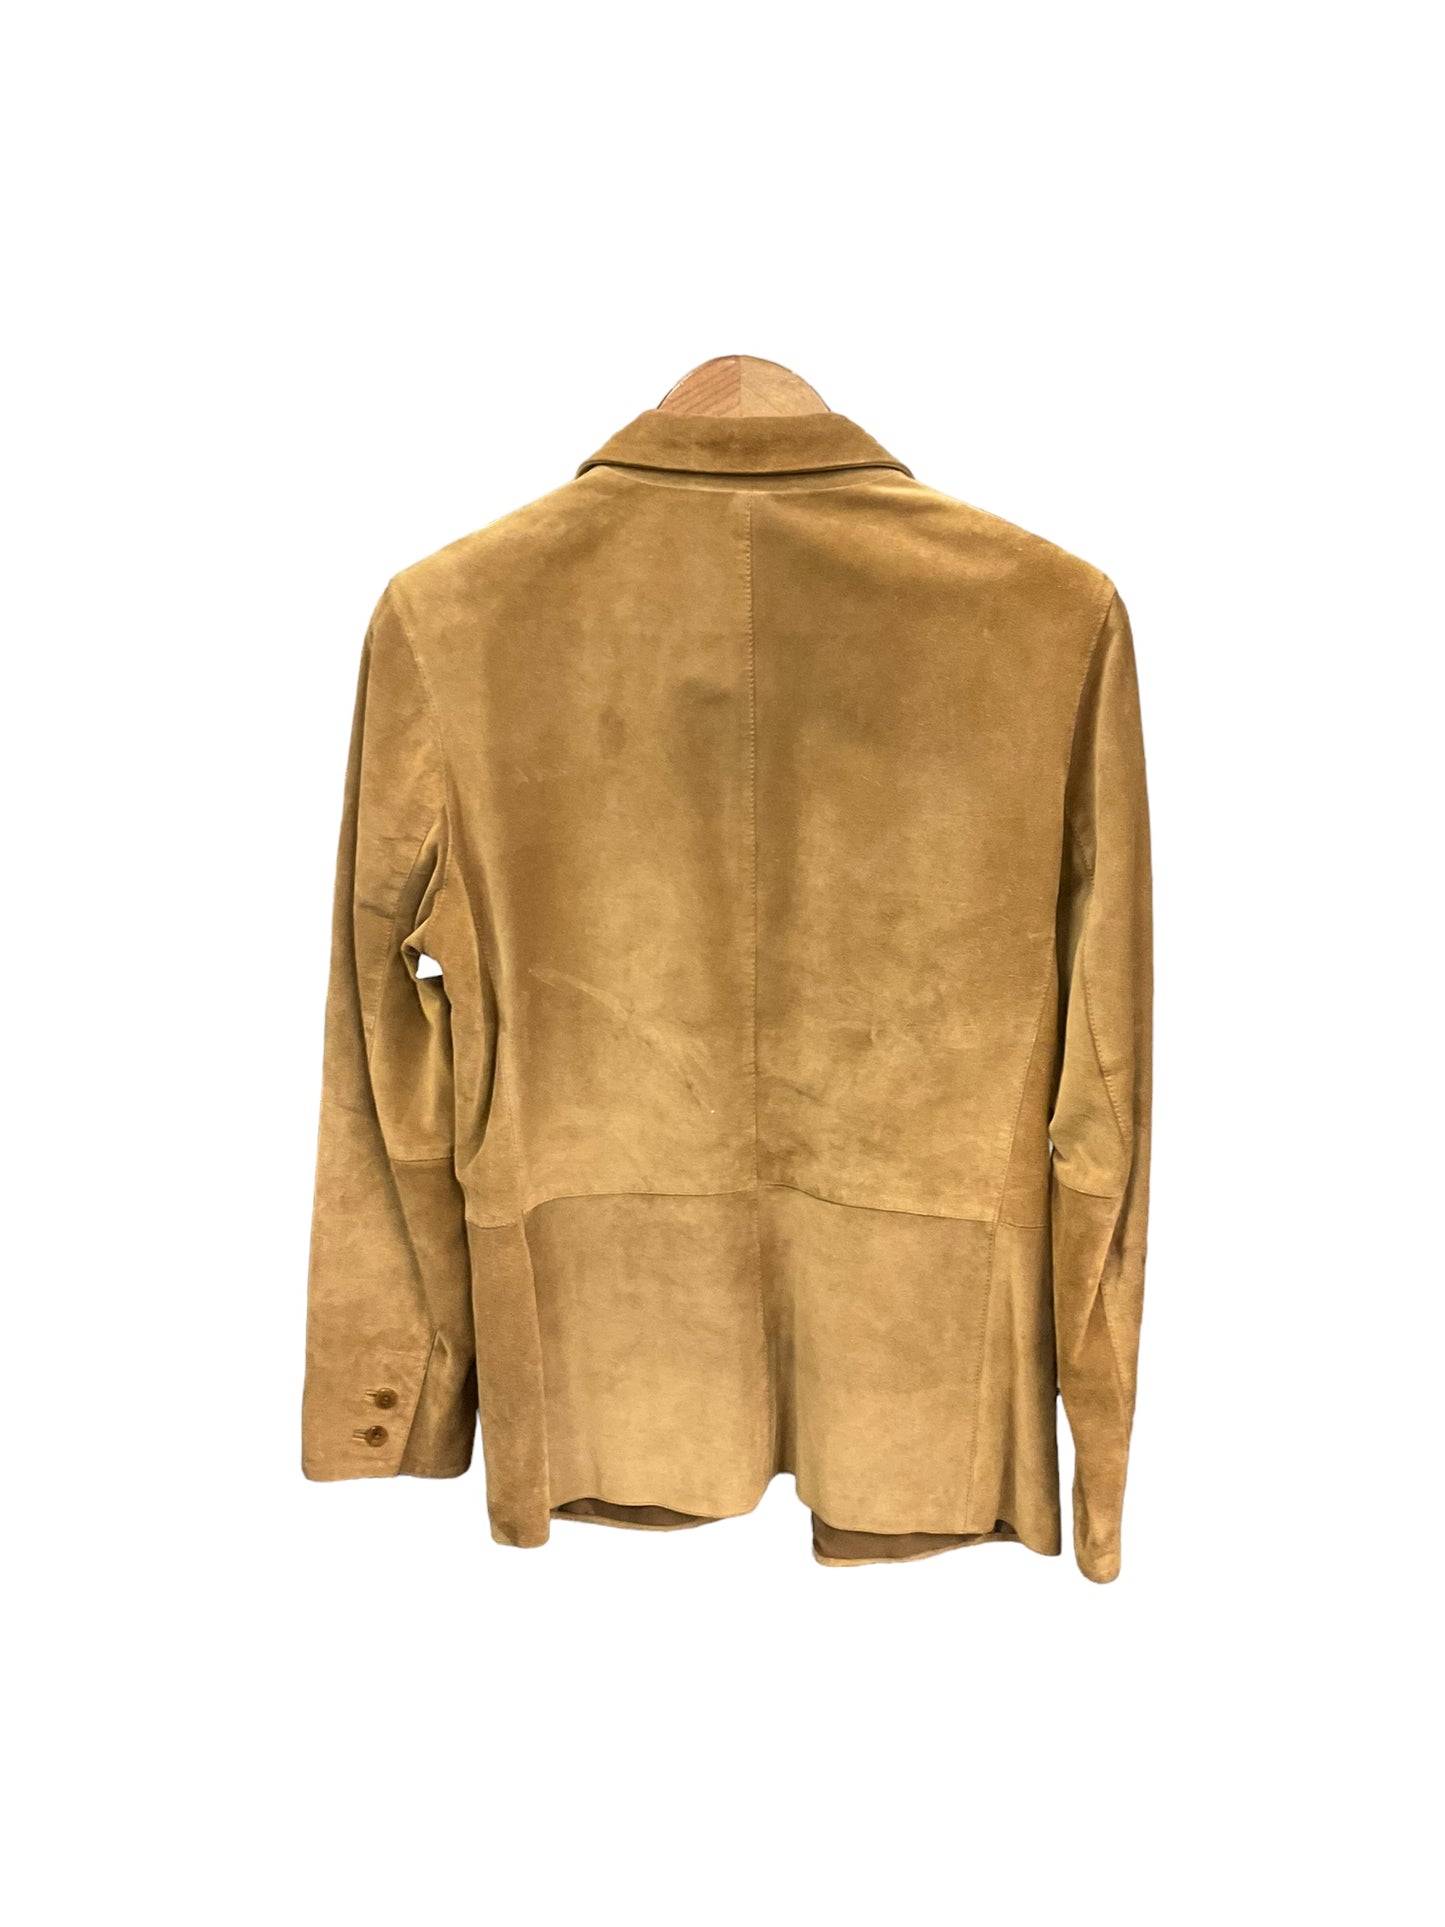 Jacket Leather By Gap  Size: M